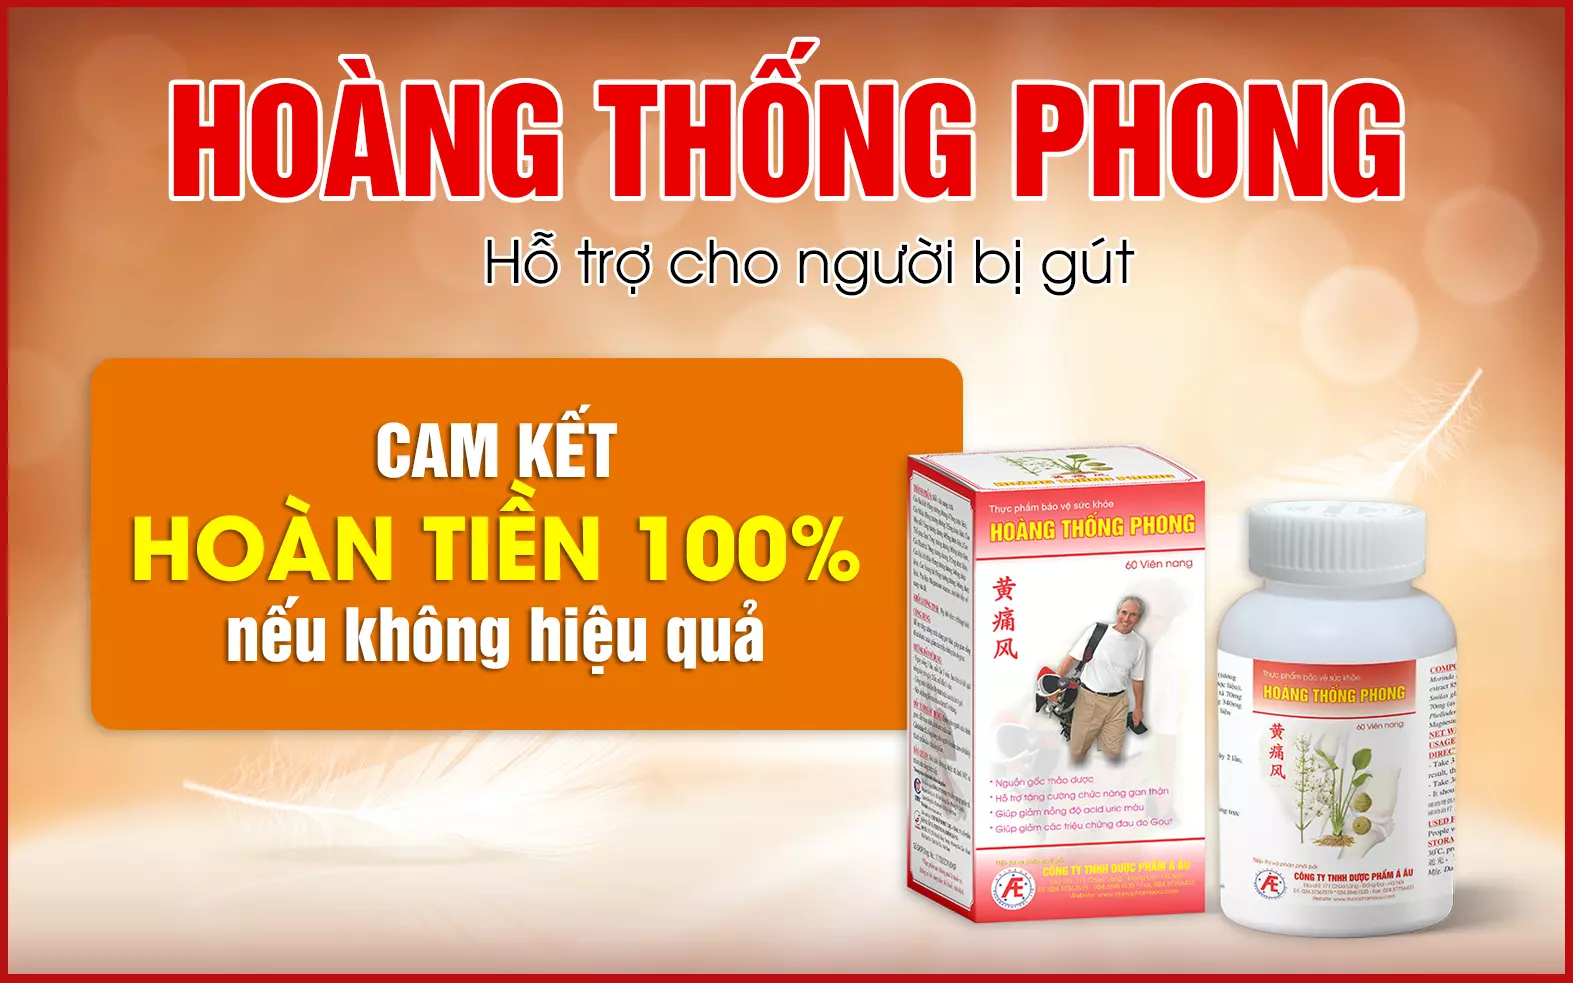 Hoang-Thong-Phong-cam-ket-hoan-lai-100-tien-neu-khong-hieu-qua.webp